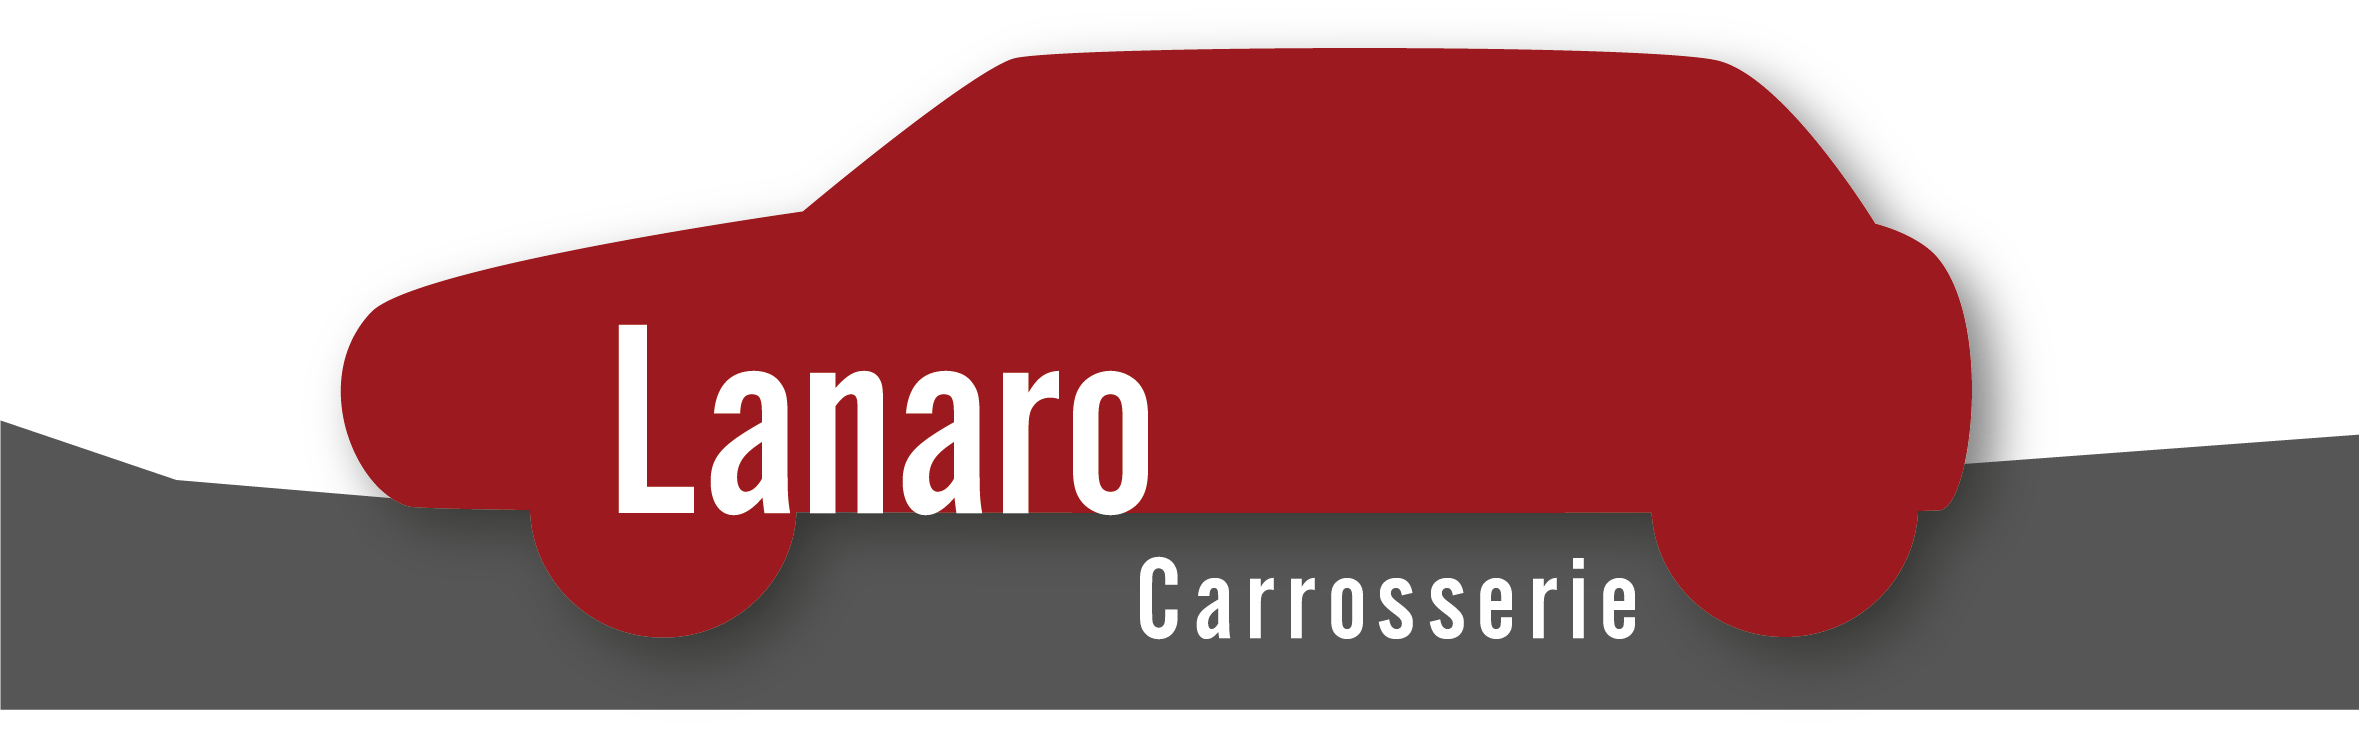 LANARO - Carrosserie